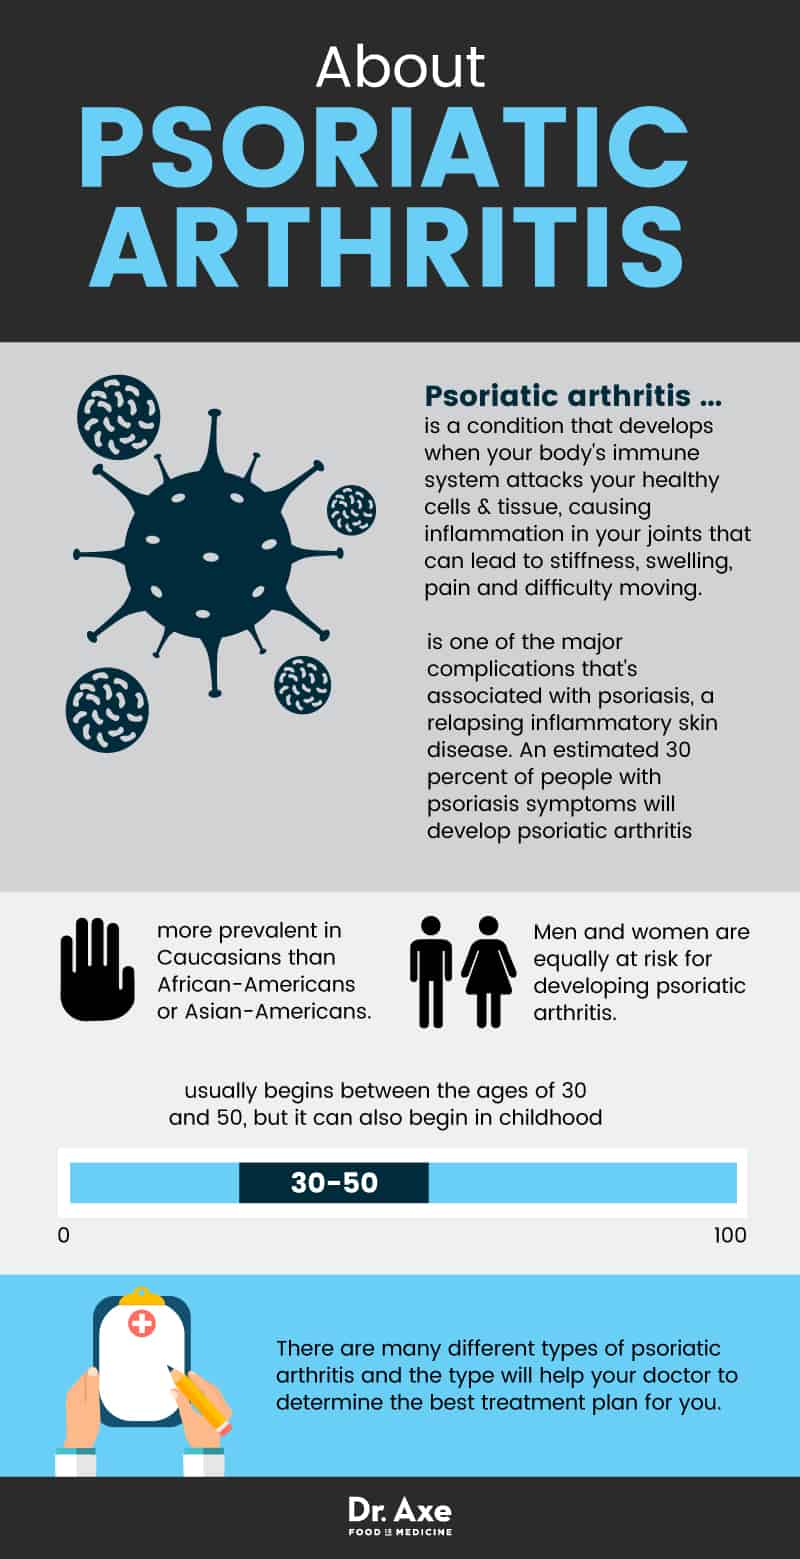 About psoriatic arthritis - Dr. Axe